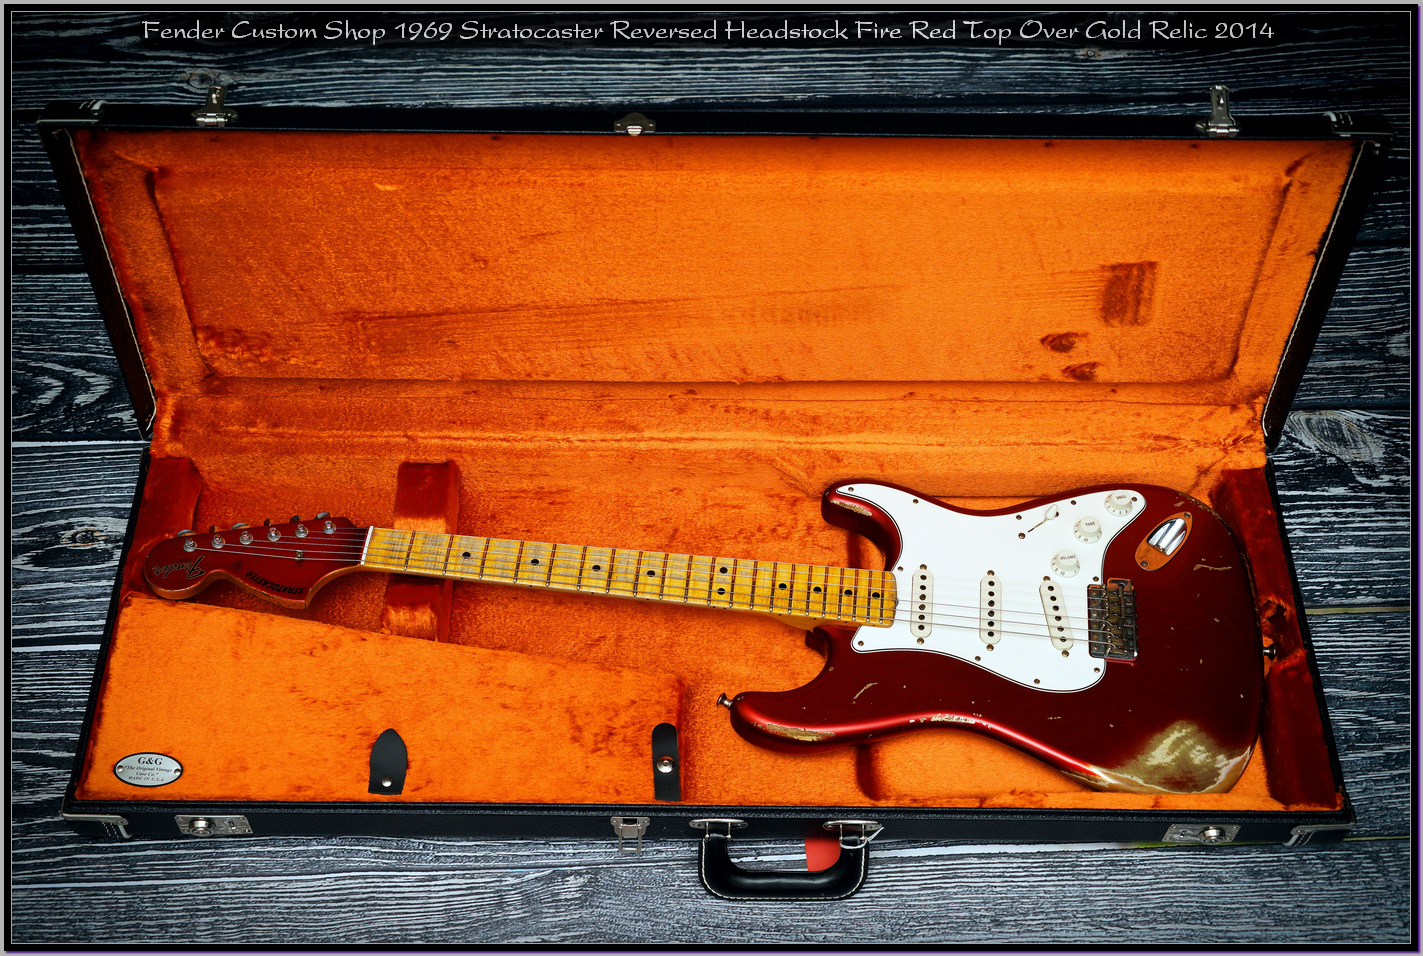 Fender Custom Shop 1969 Stratocaster Reversed Headstock Fire Red Top Over Gold Relic 2014 19_x1440.jpg